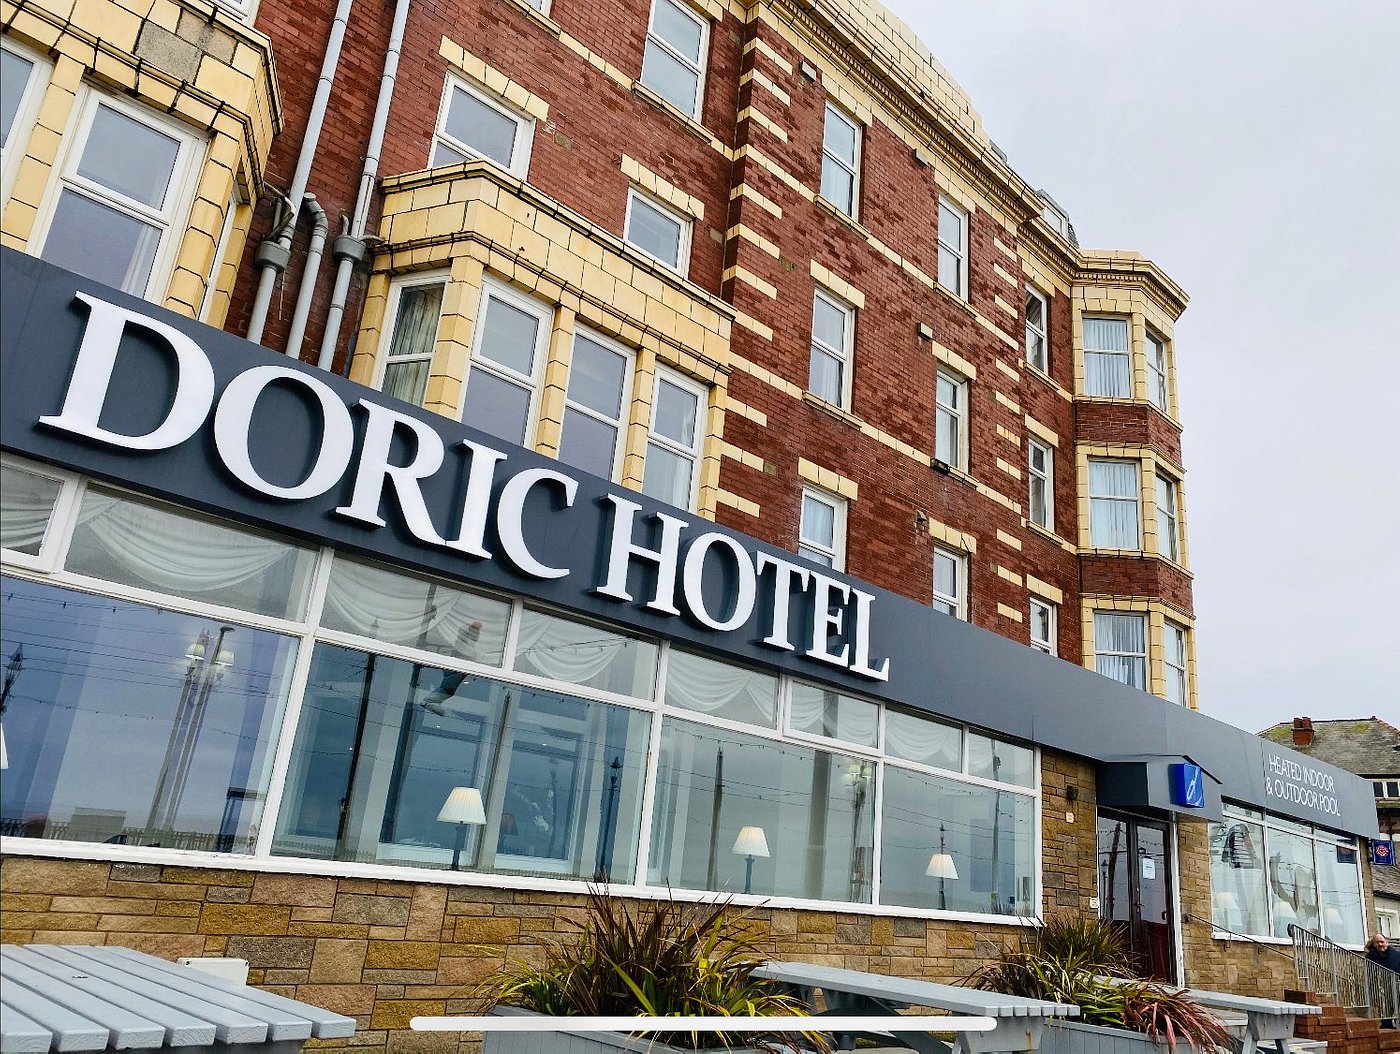 The Doric Hotel